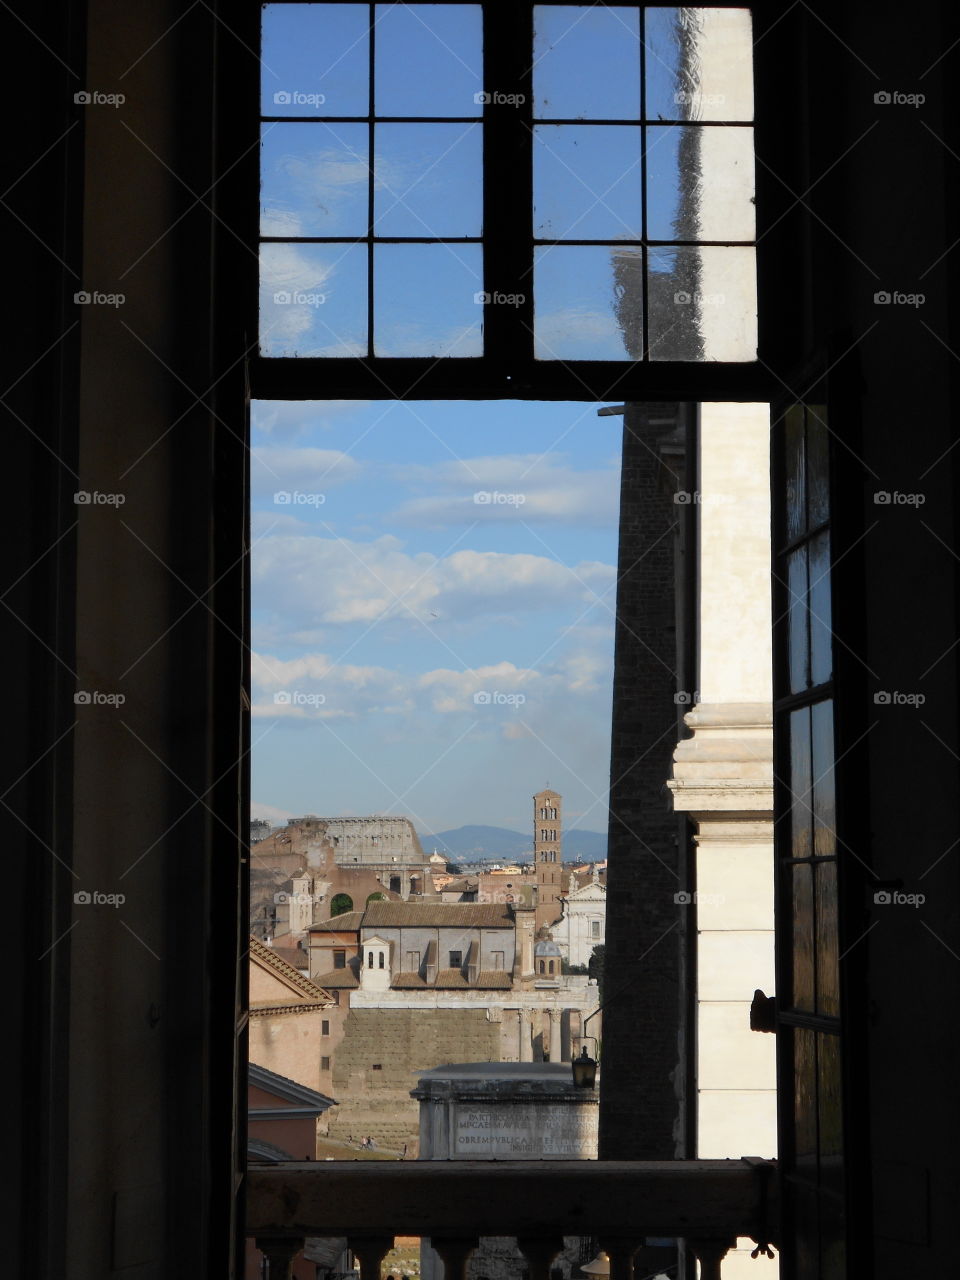 Roma in the windows